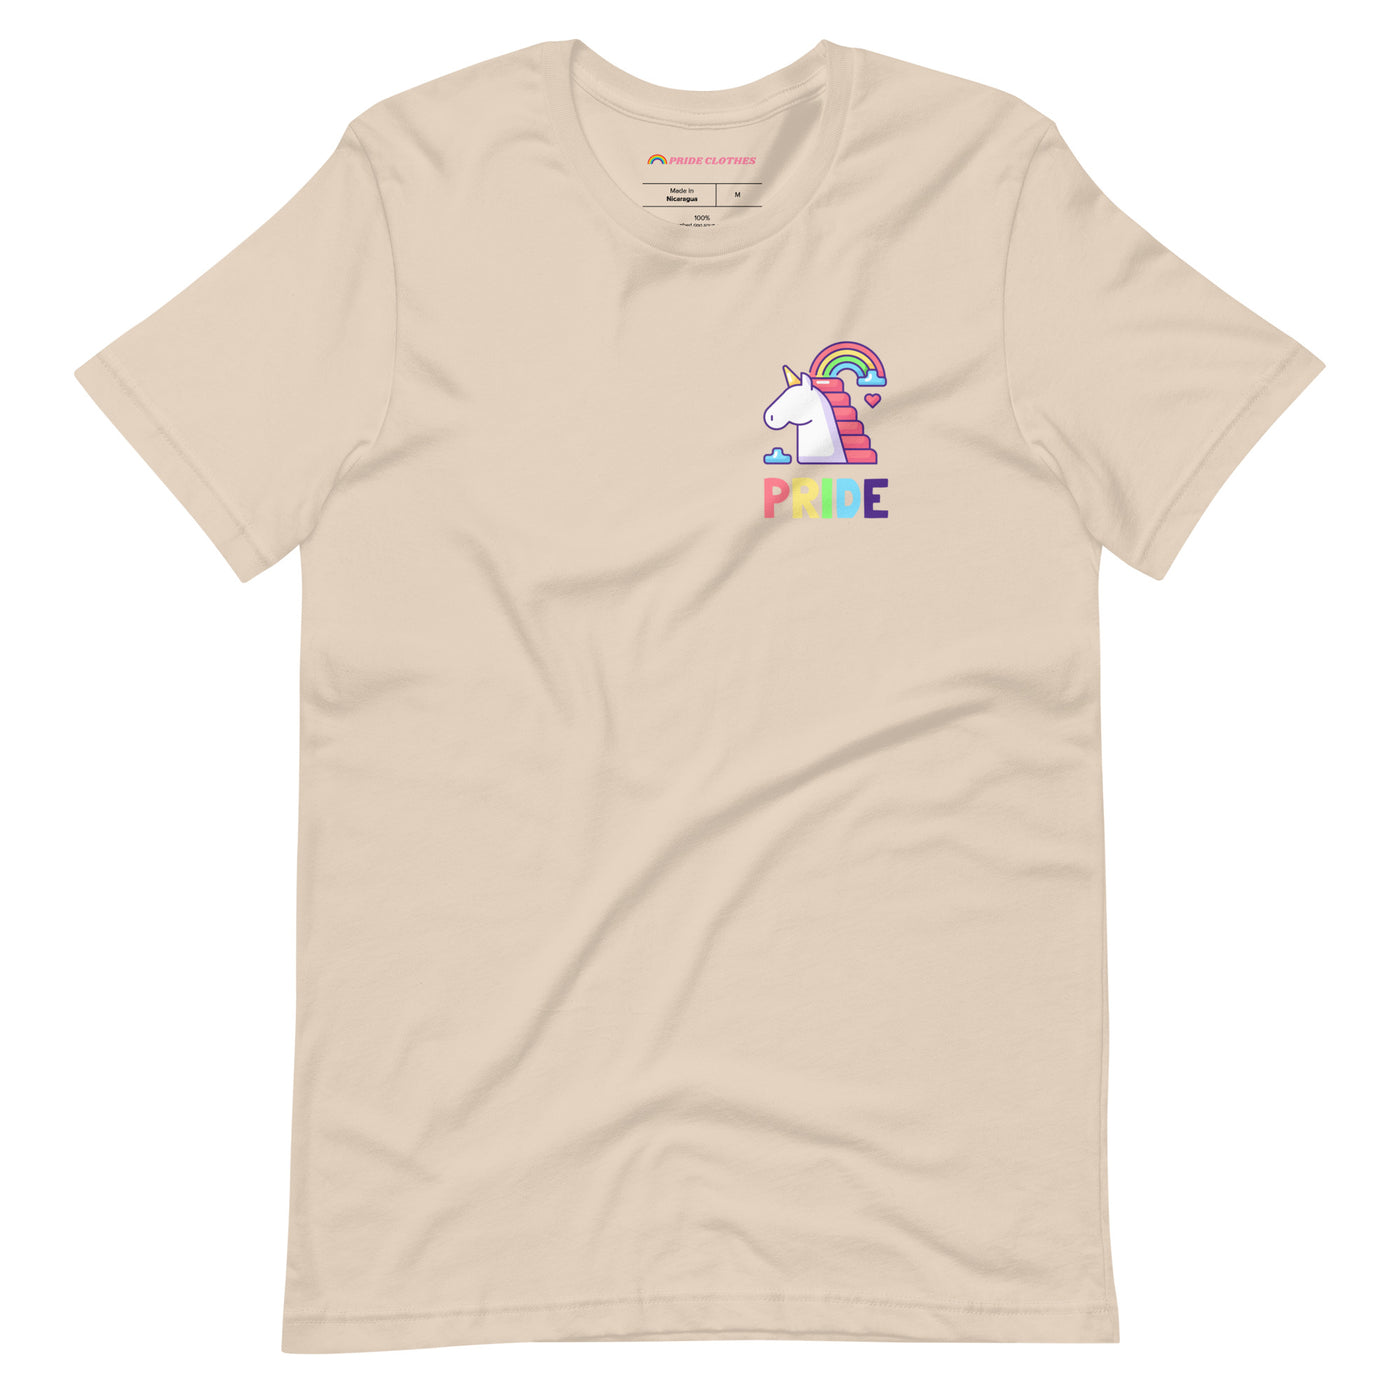 Pride Clothes - Unicorn Magic in the Air Charming Unicorn Pride TShirt - Soft Cream